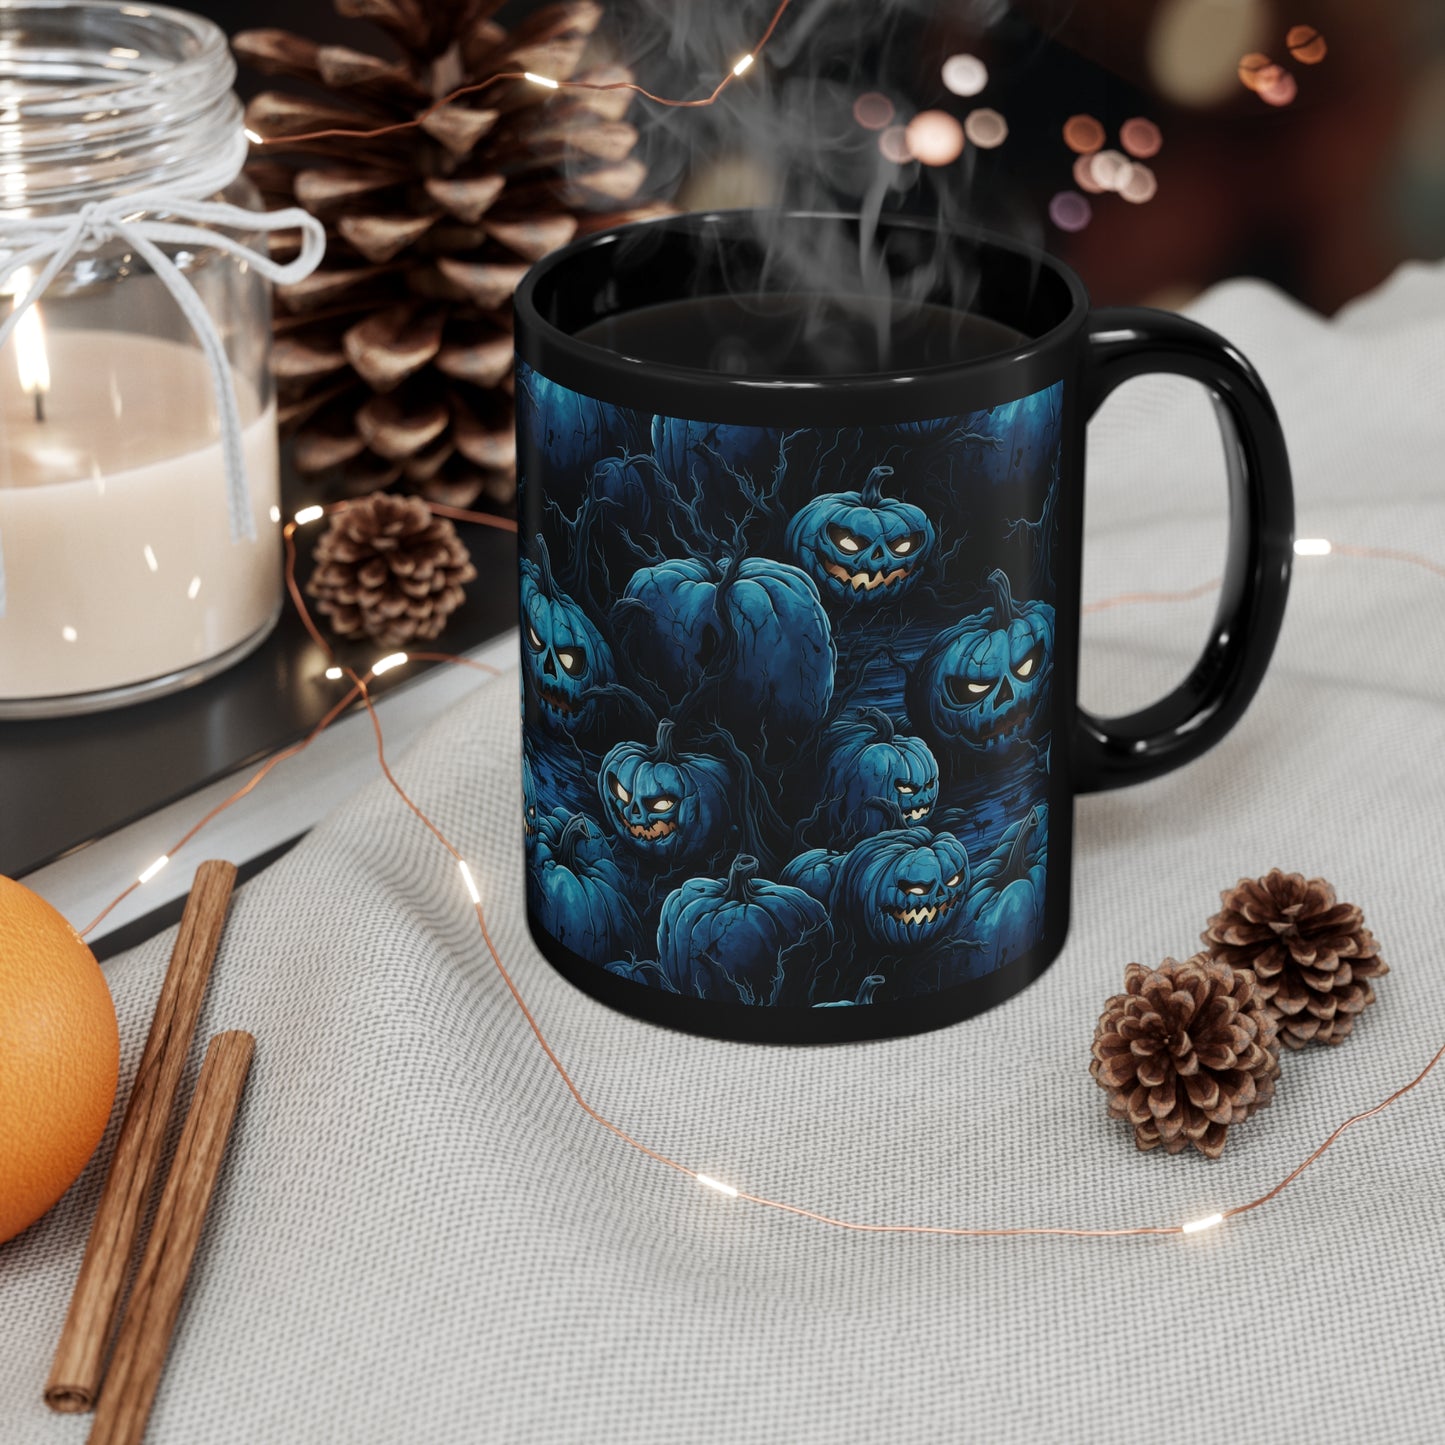 Mug Spooky Blue Halloween Pumpkins - Frogos Design